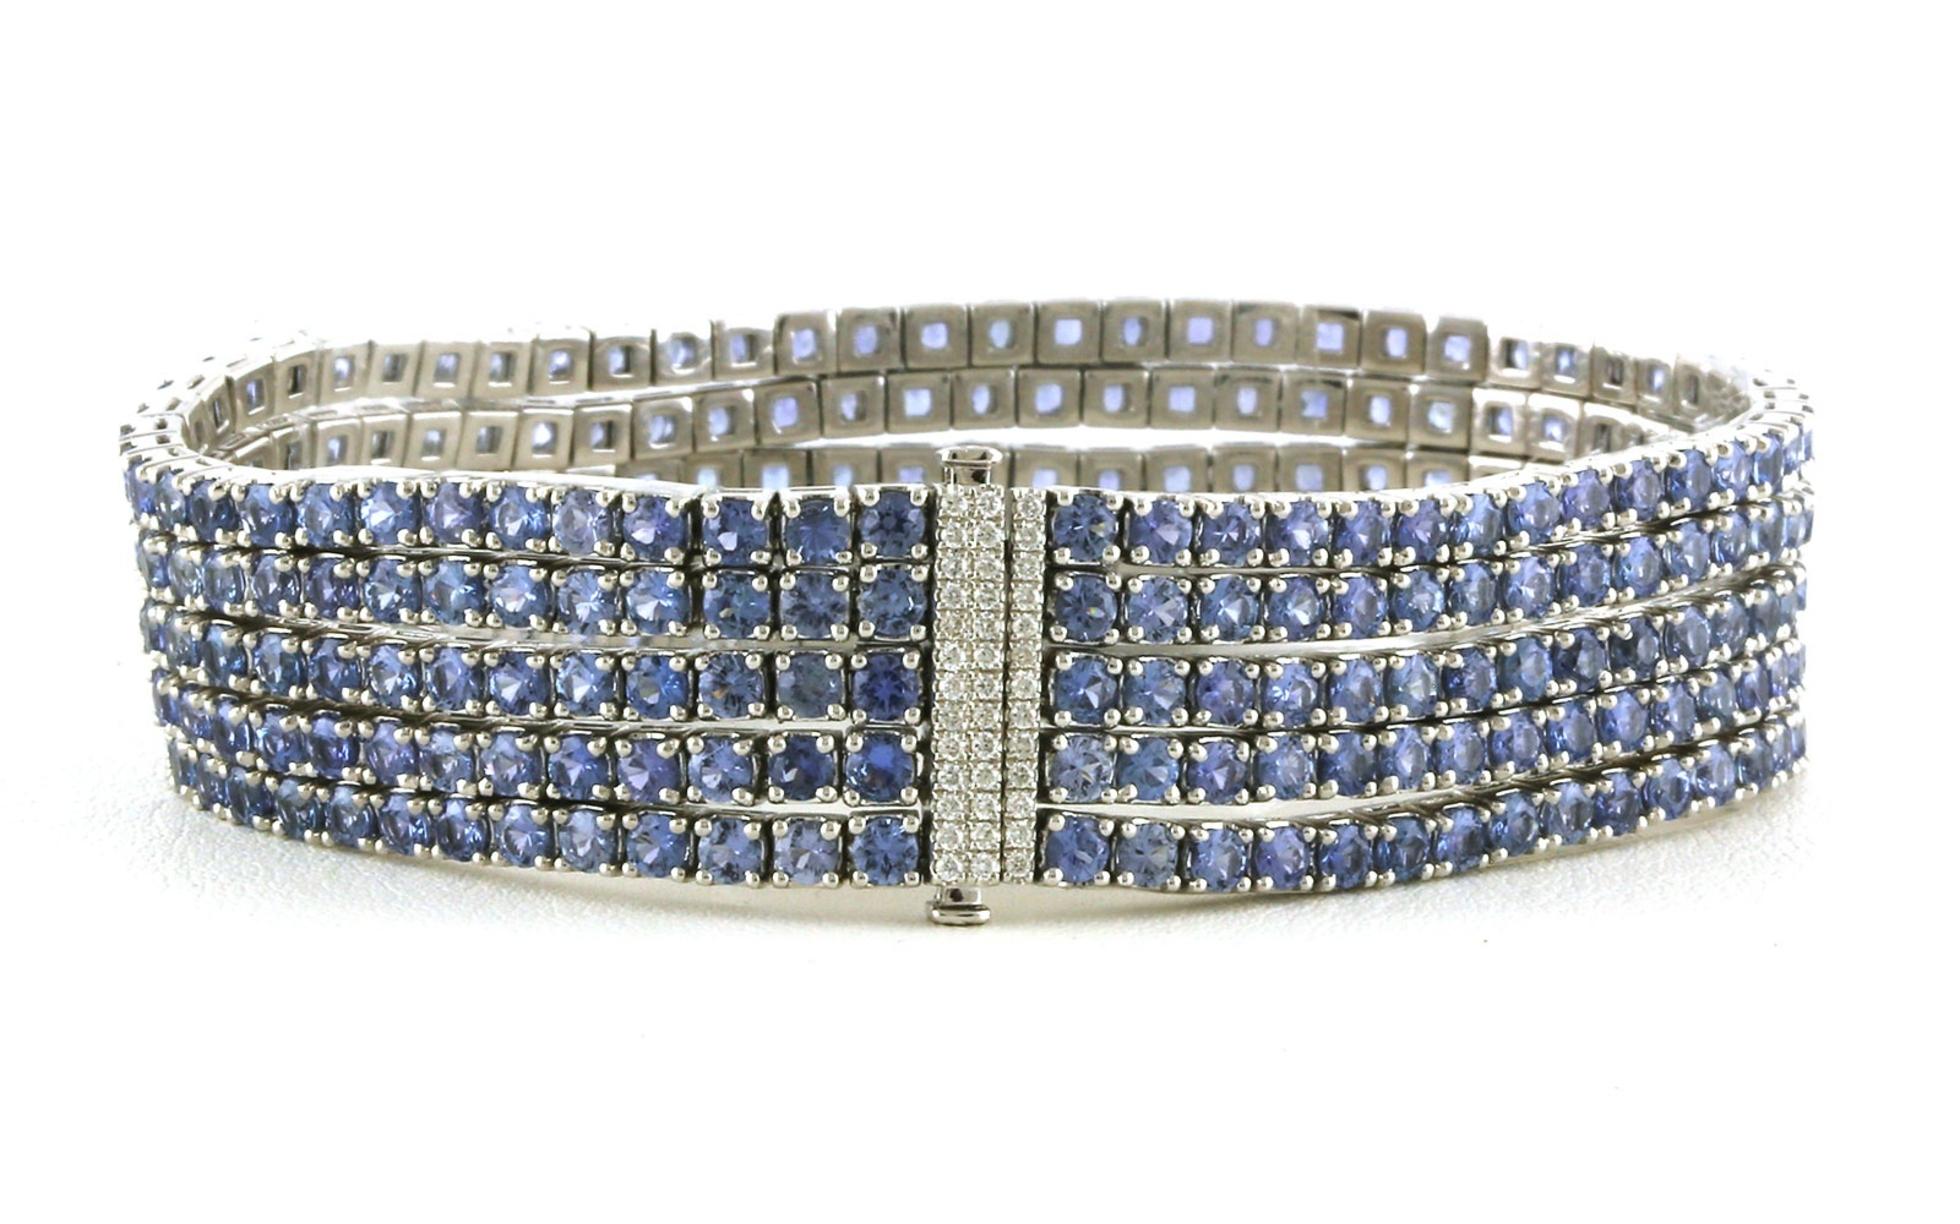 5-Row Montana Yogo Sapphire Tennis-style Bracelet with Diamond Clasp in White Gold (17.78cts TWT)